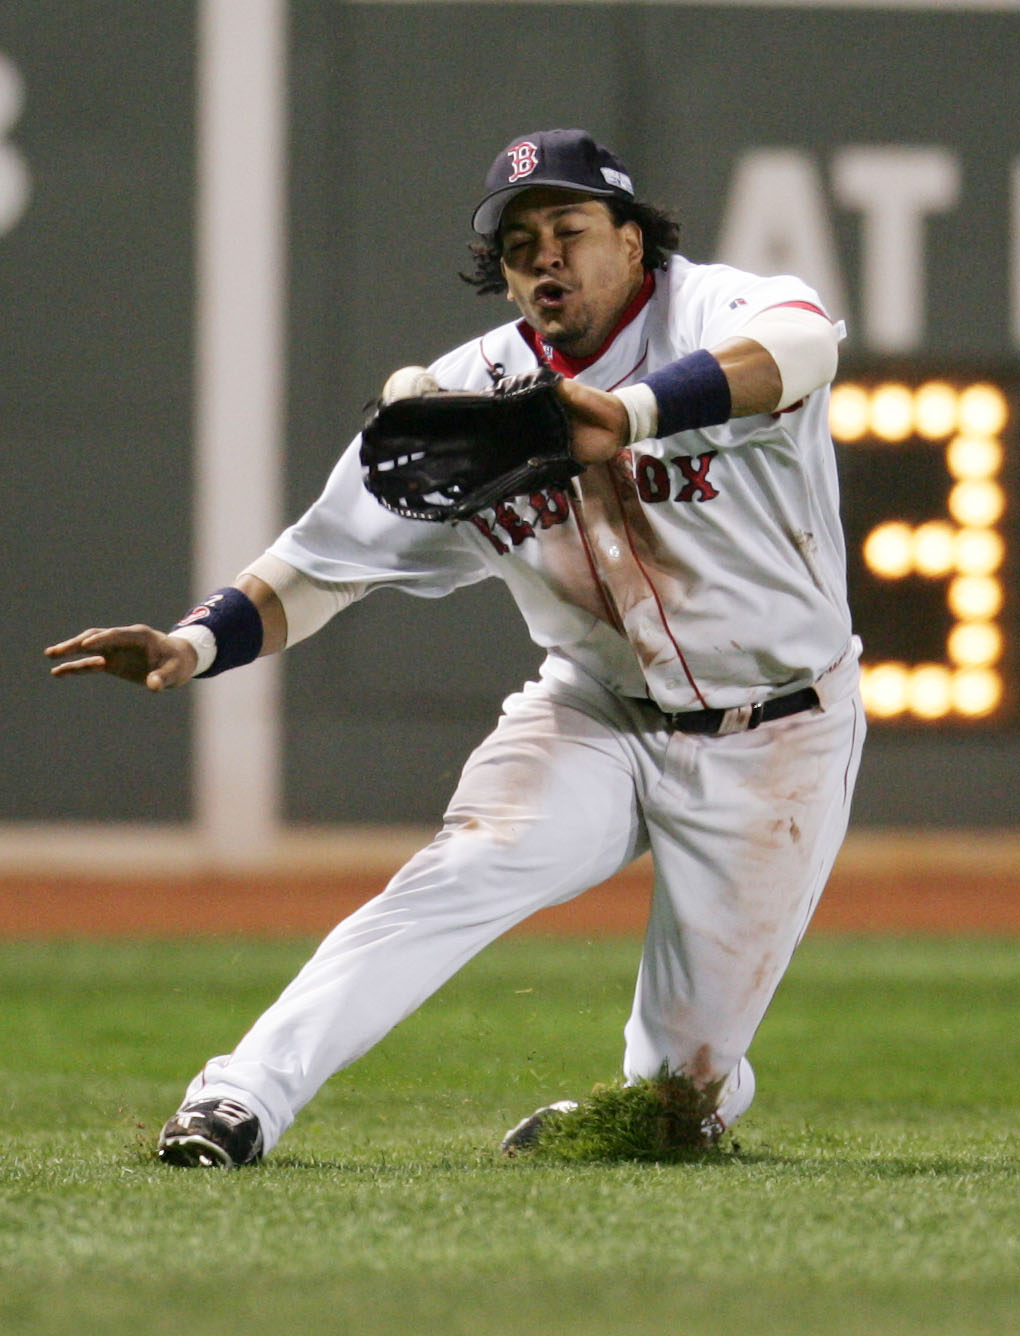 Web gem catch earns Manny Ramirez high 5 – Boston Herald